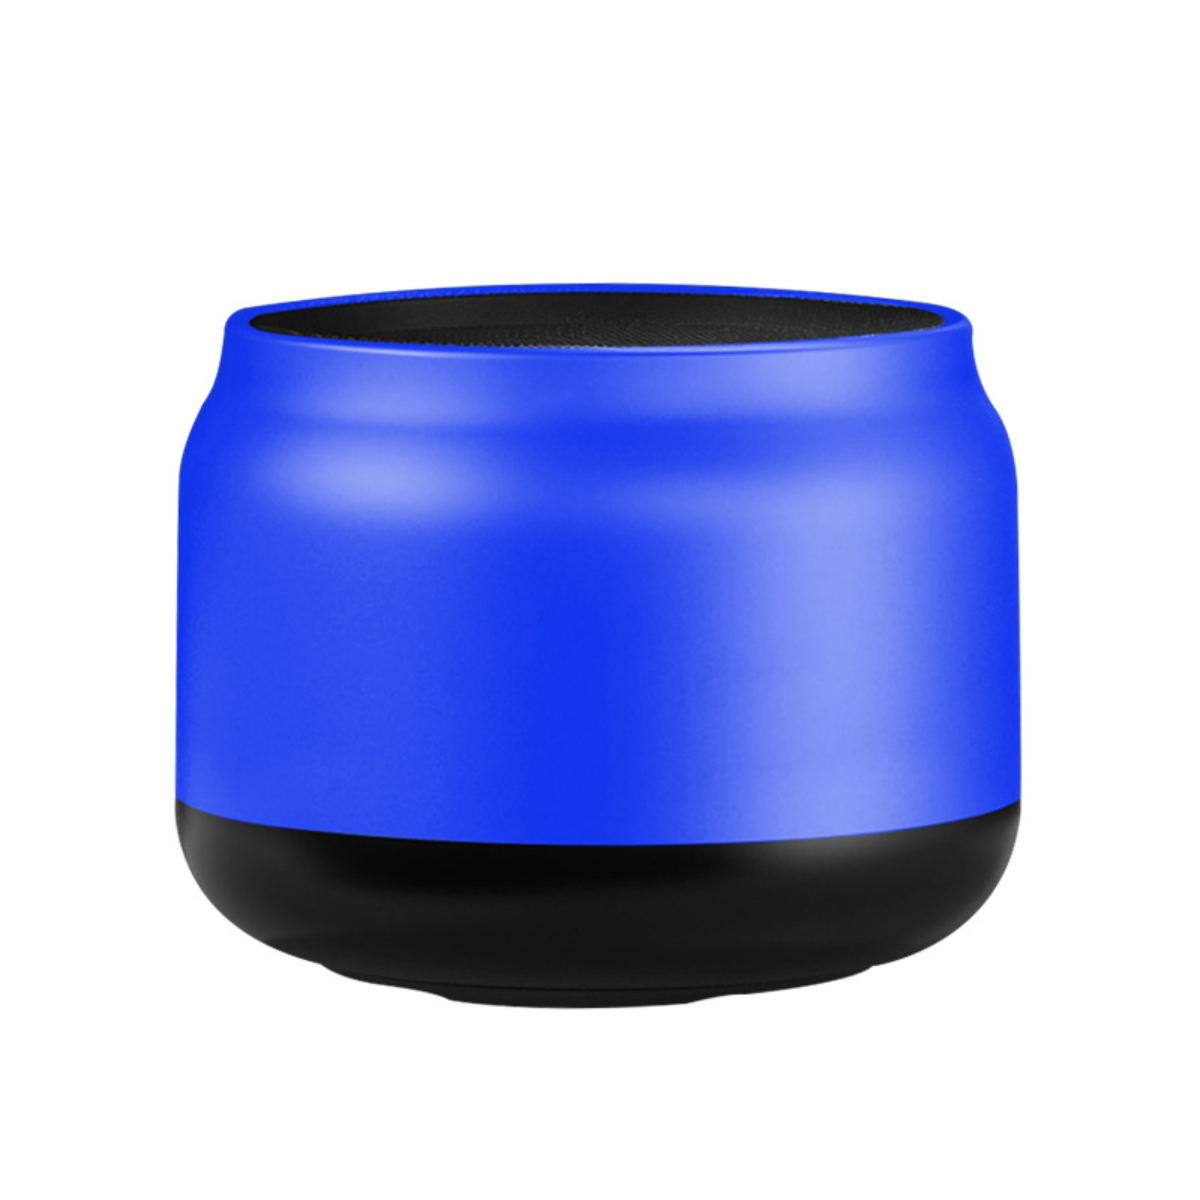 BYTELIKE Bluetooth-Mini-Metall-Lautsprecher, Subwoofer, und Tragbar Bluetooth-Lautsprecher, Blau Langlebigkeit, Kompakt